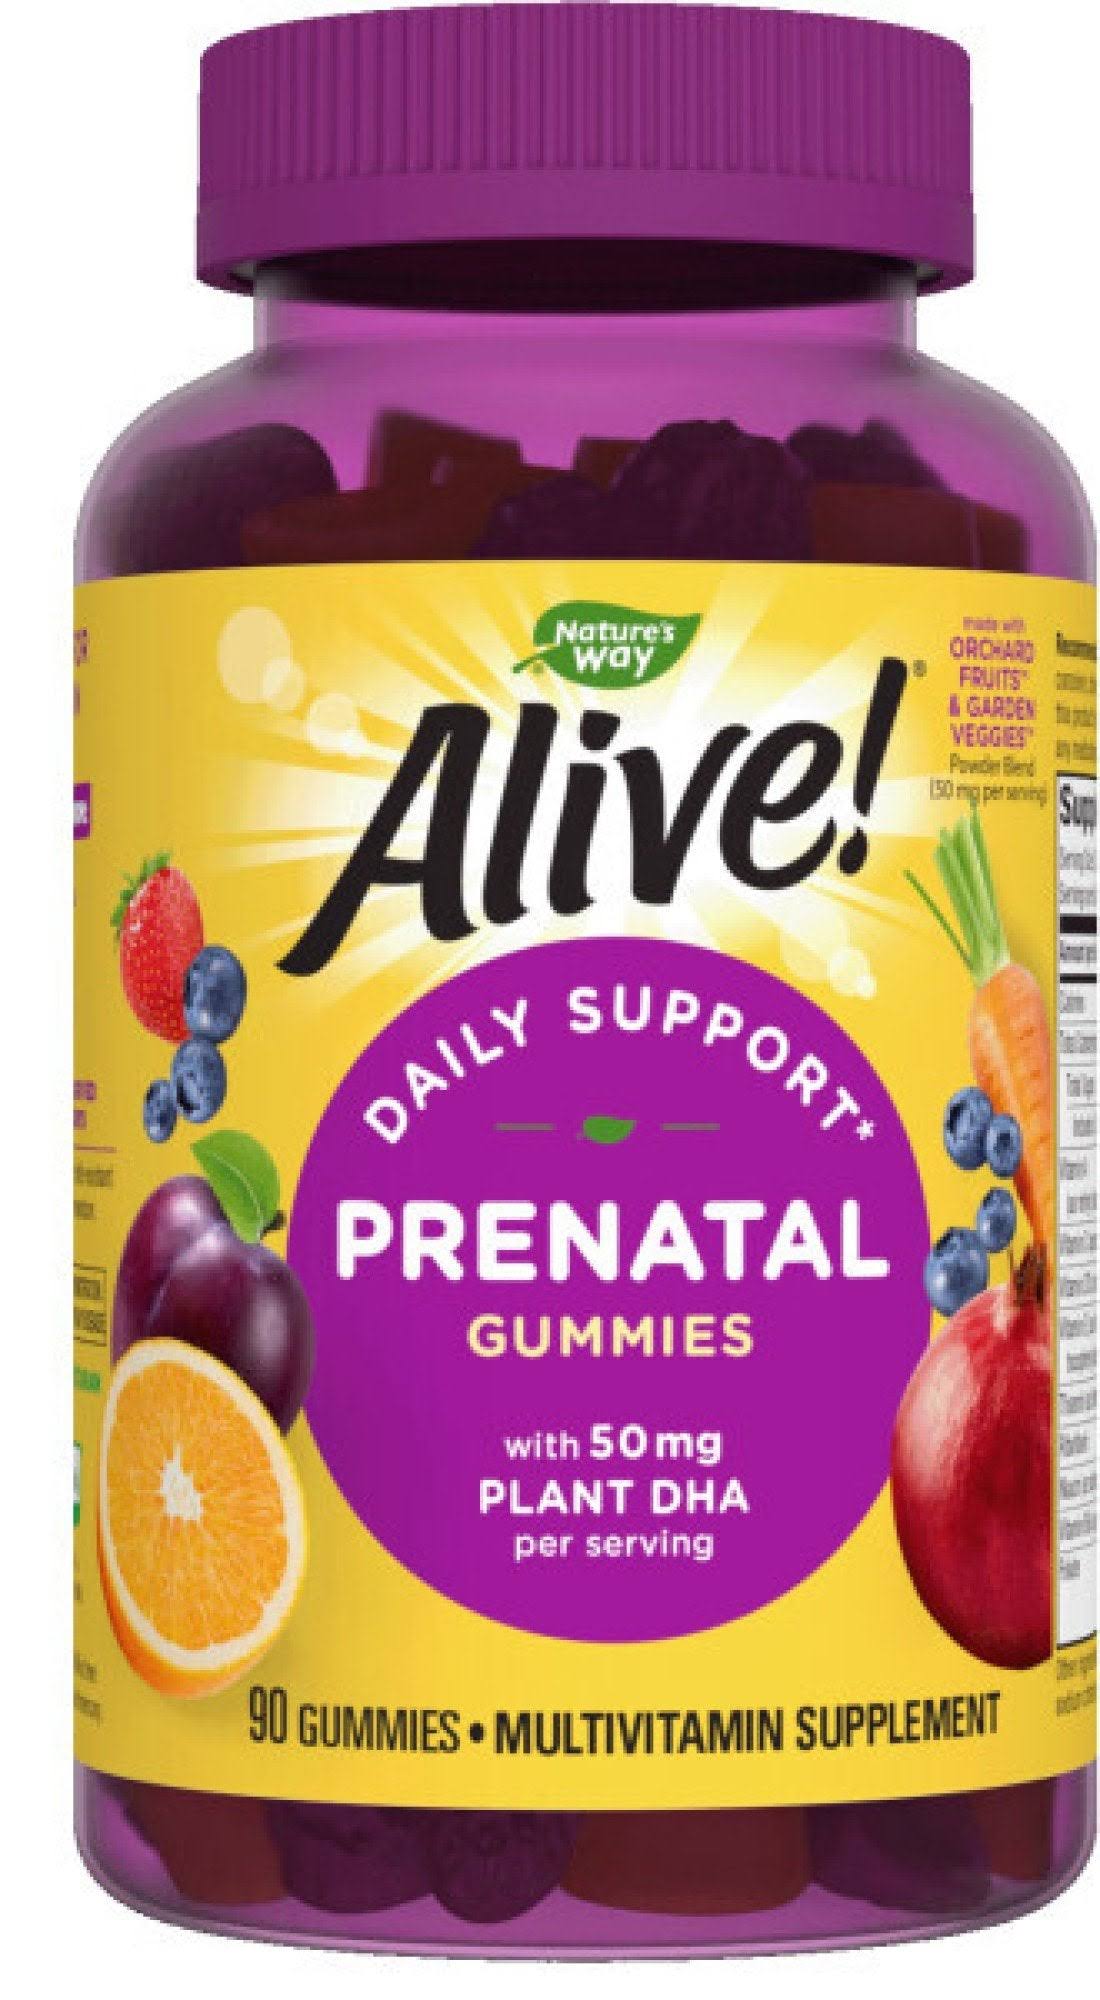 Nature's Way Prenatal Gummies Plant DHA Supplement - Strawberry Lemon Flavored, 90 Count